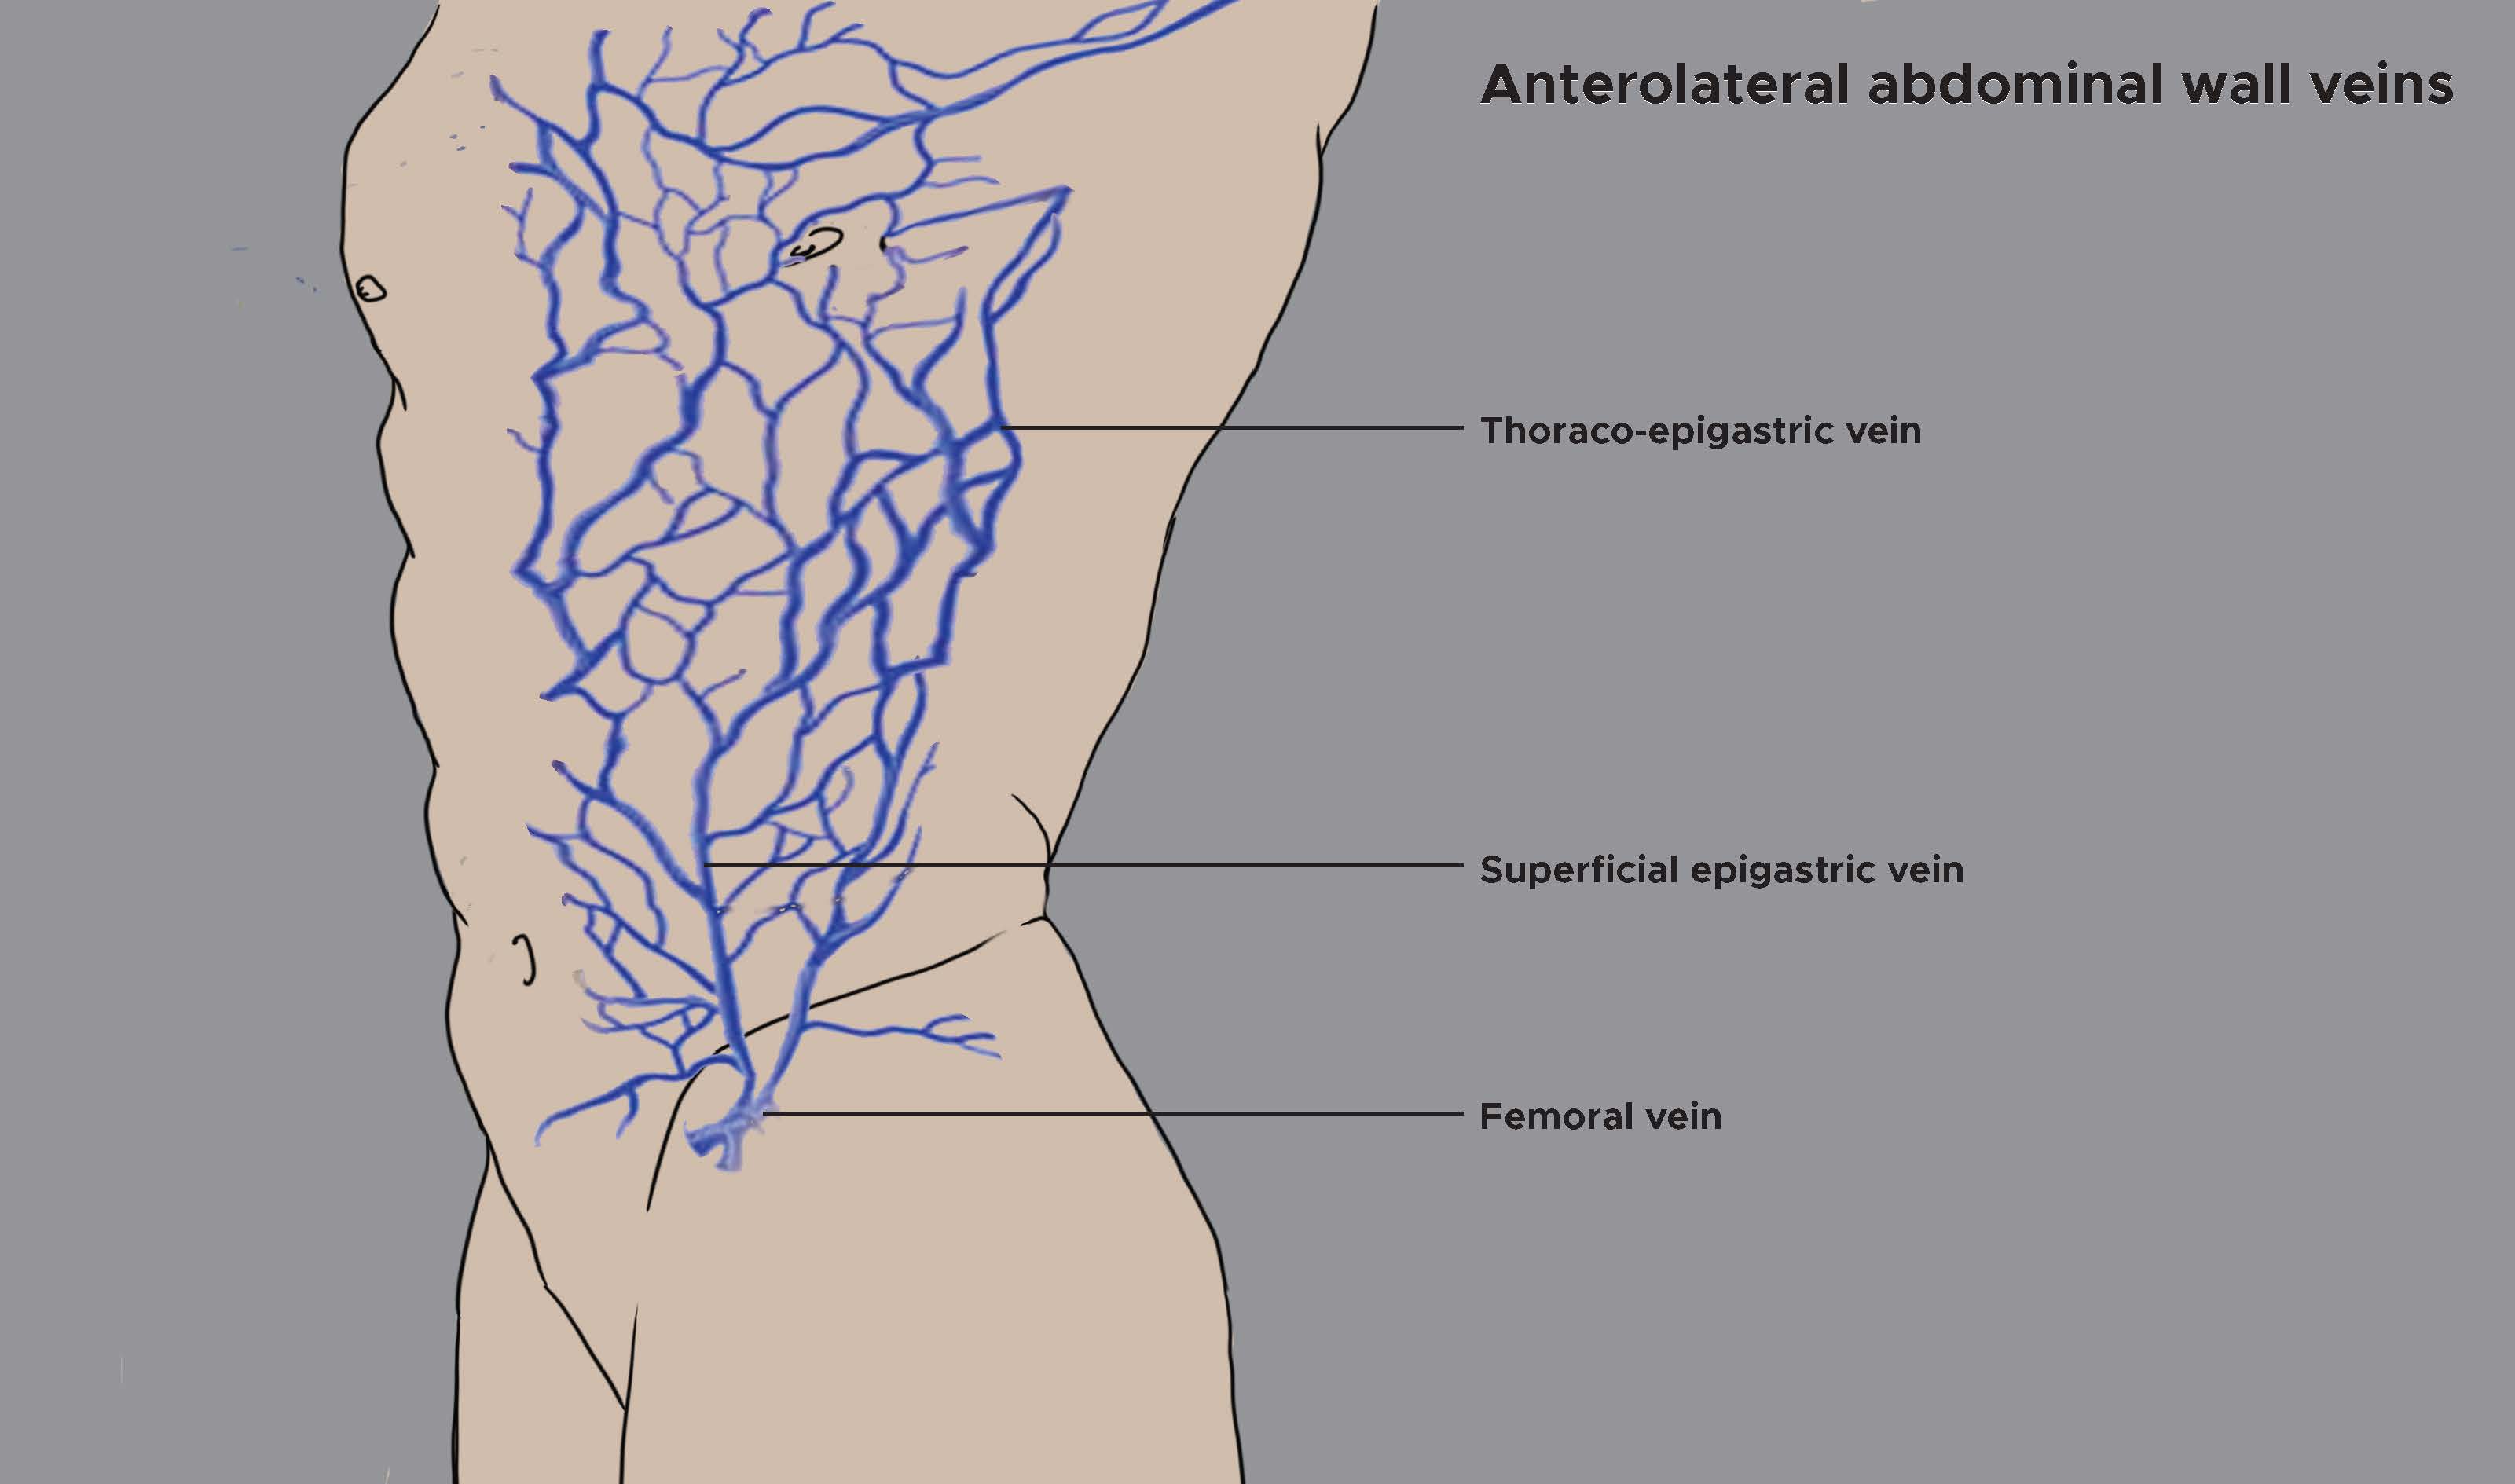 Abdominal wall veins, anterolateral